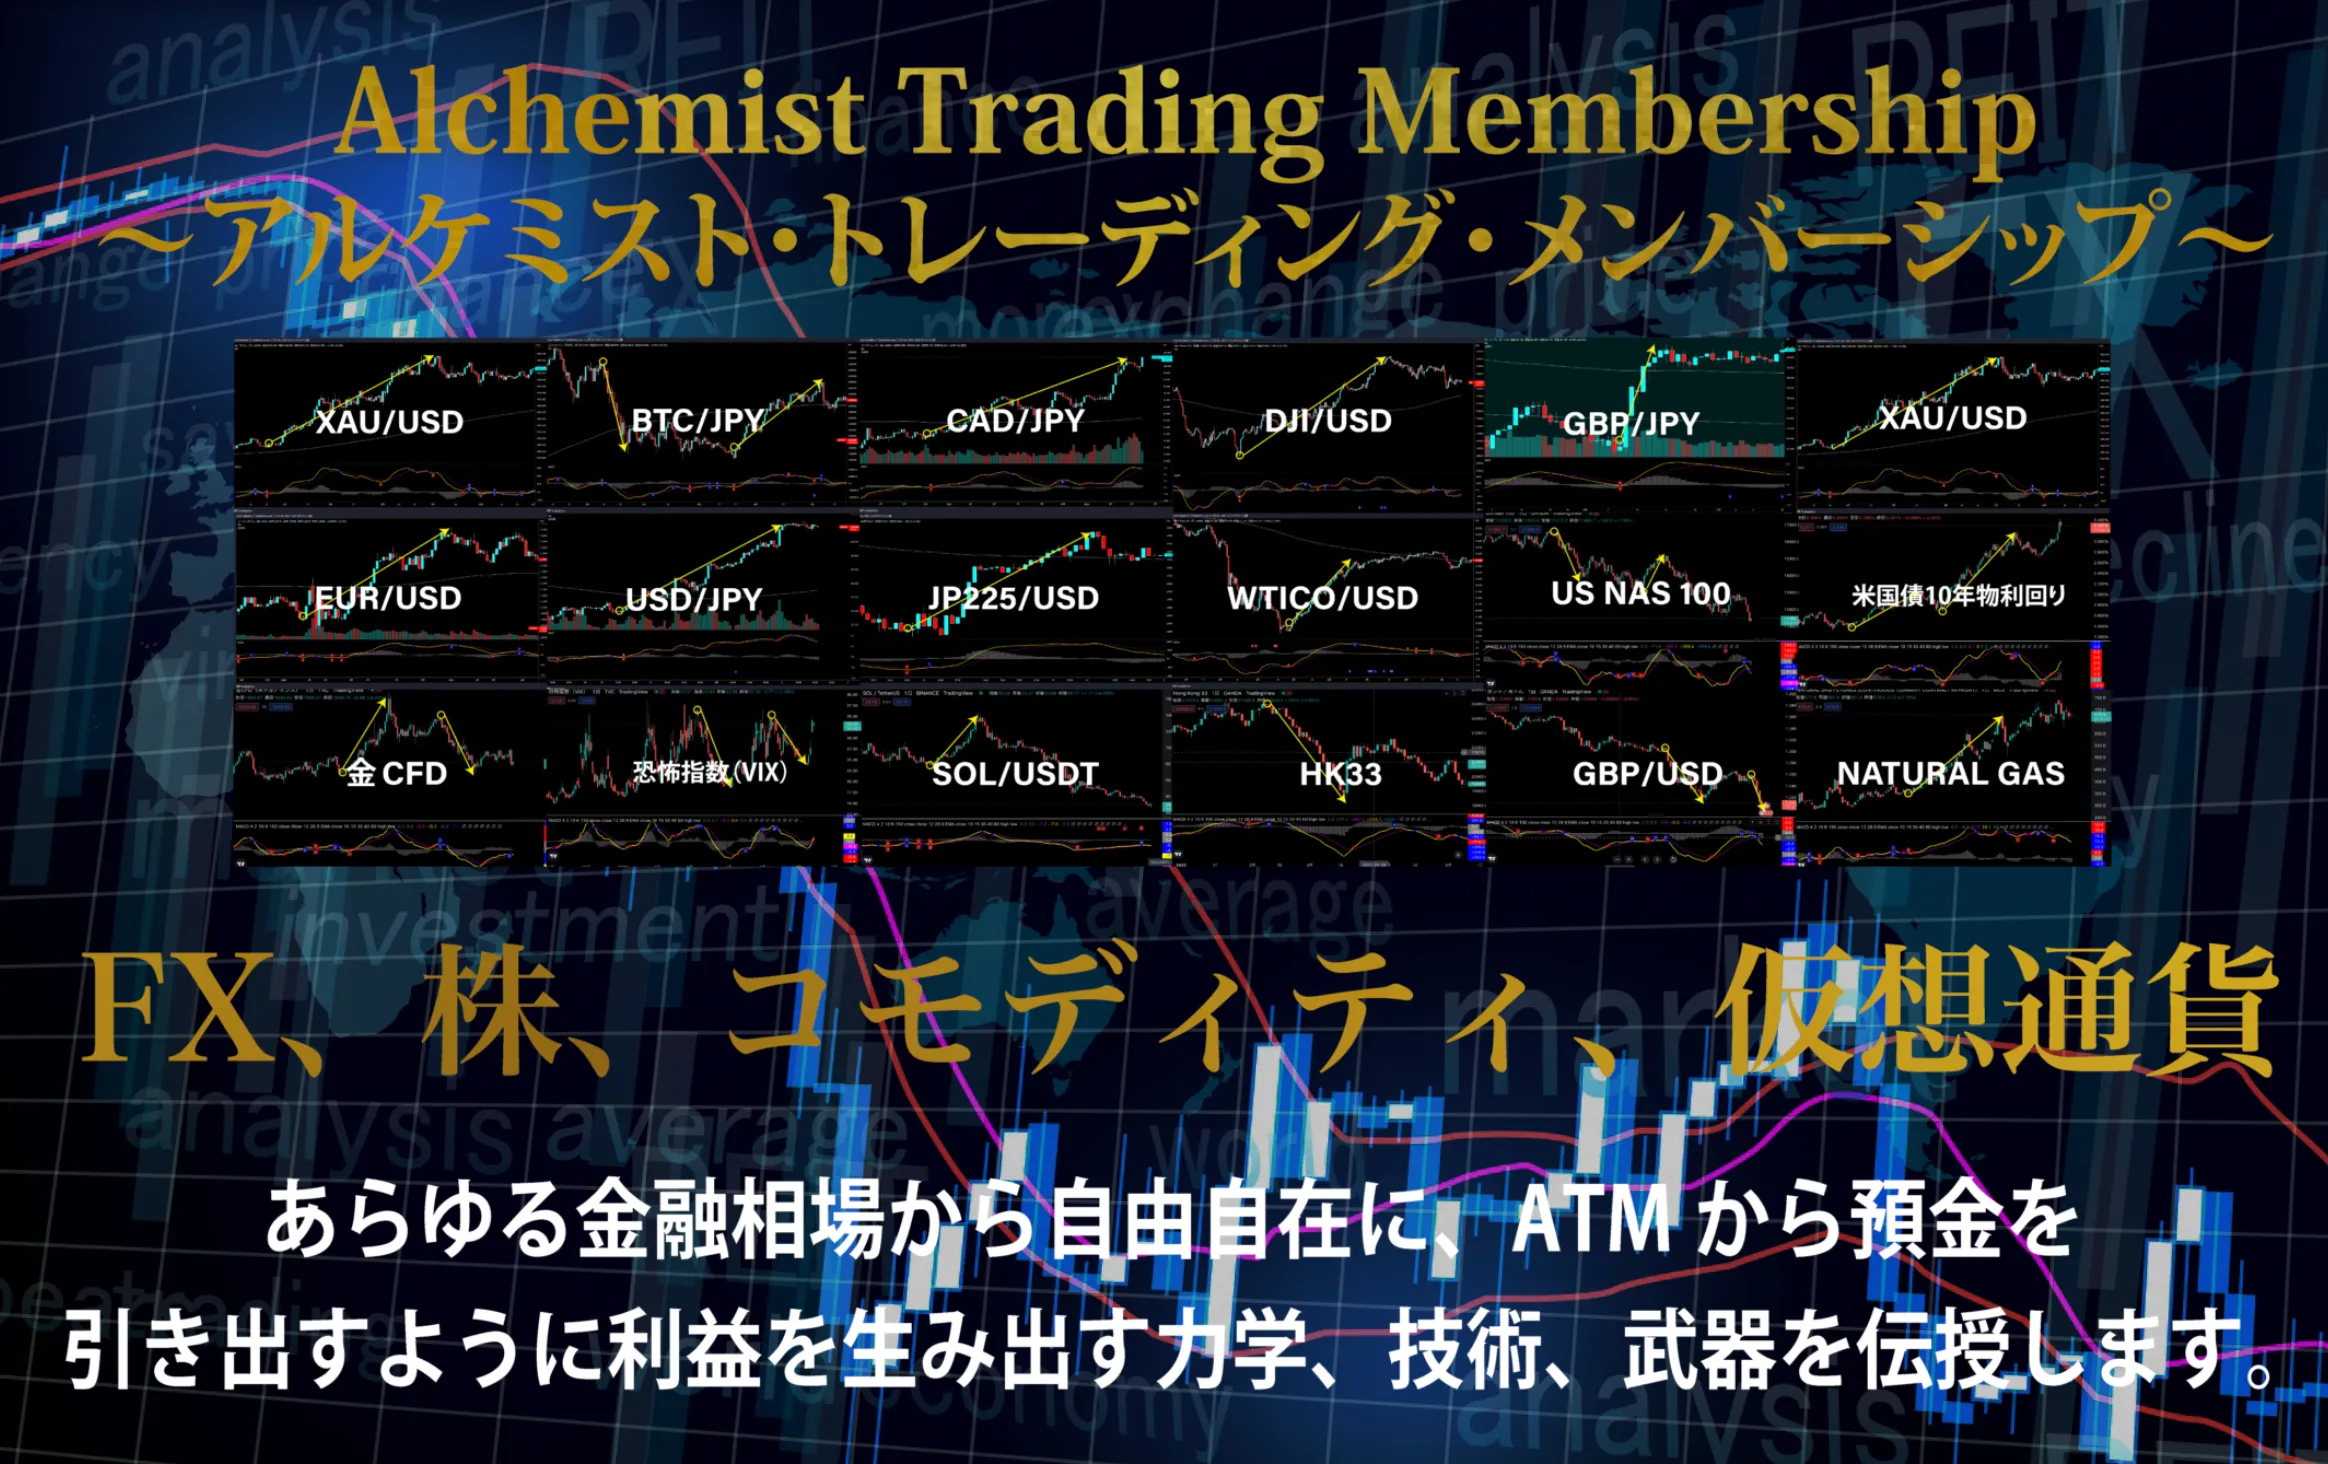 Alchemist_Trading_Membership (ATM)